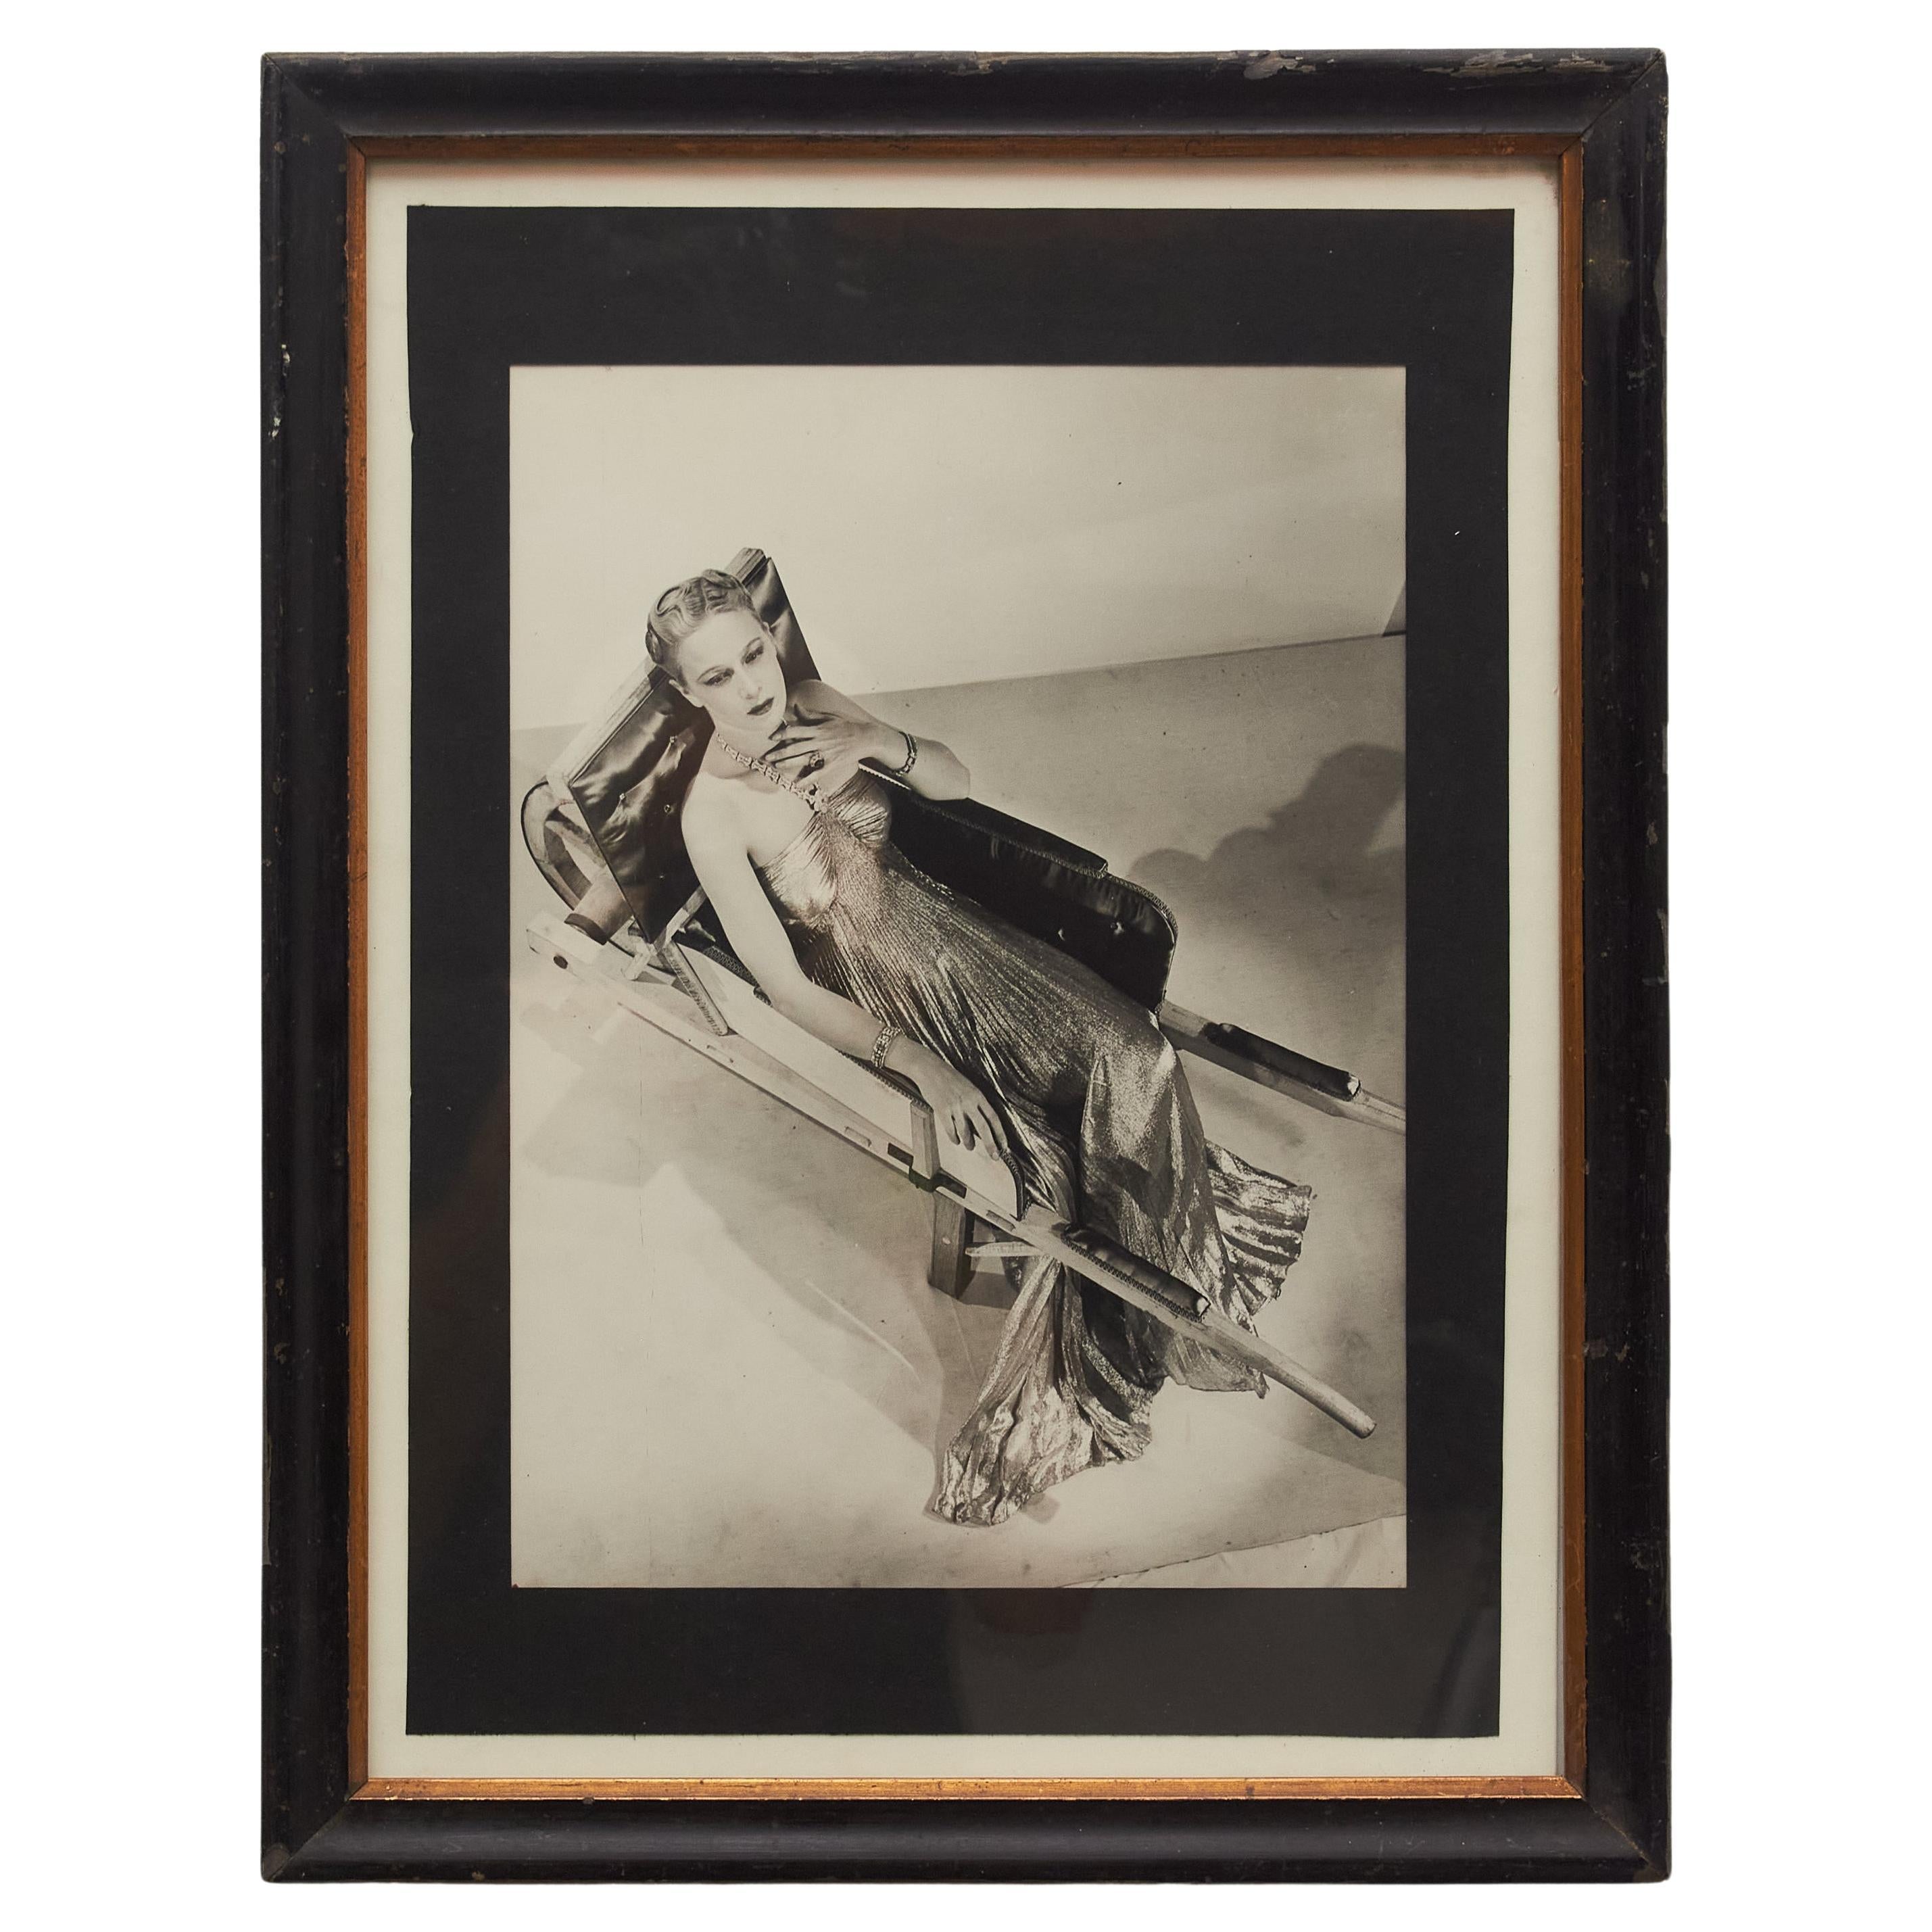 Man Ray Meisterwerk: Timeless Elegance in Monochrome - Gerahmte Vintage-Fotografie